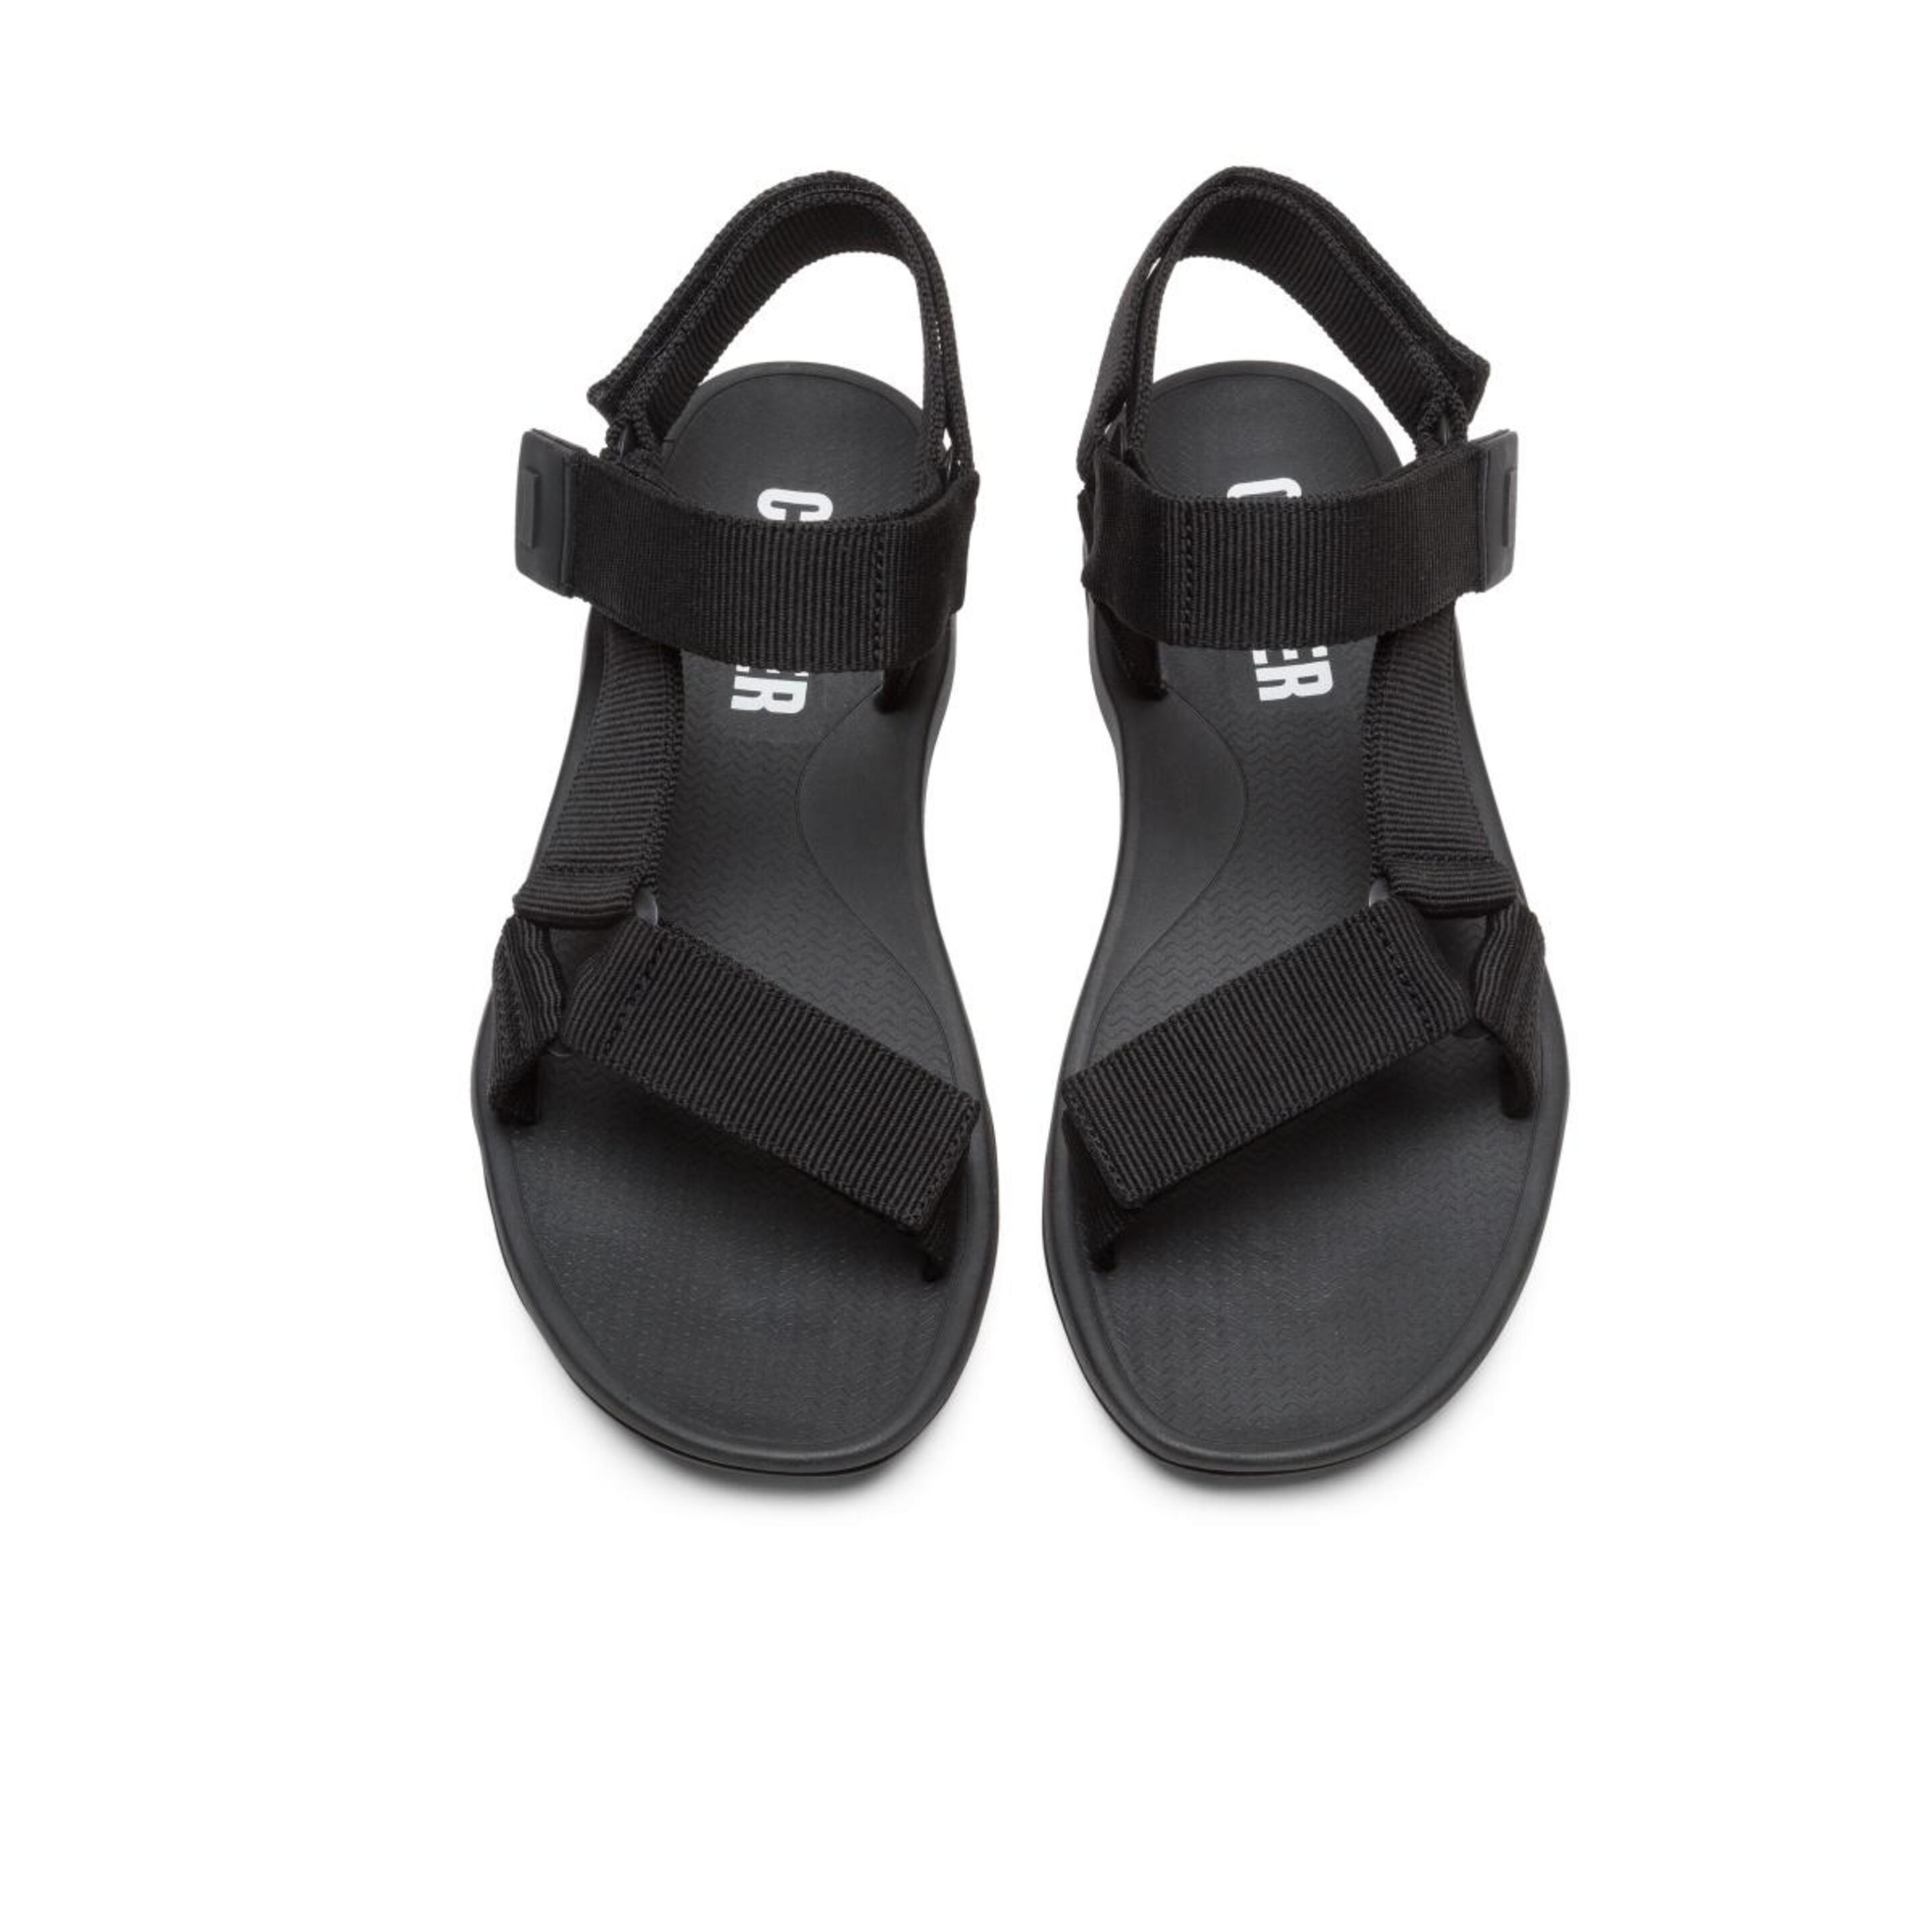 Sandalias Match Camper - negro - Zapatos Hombre  MKP